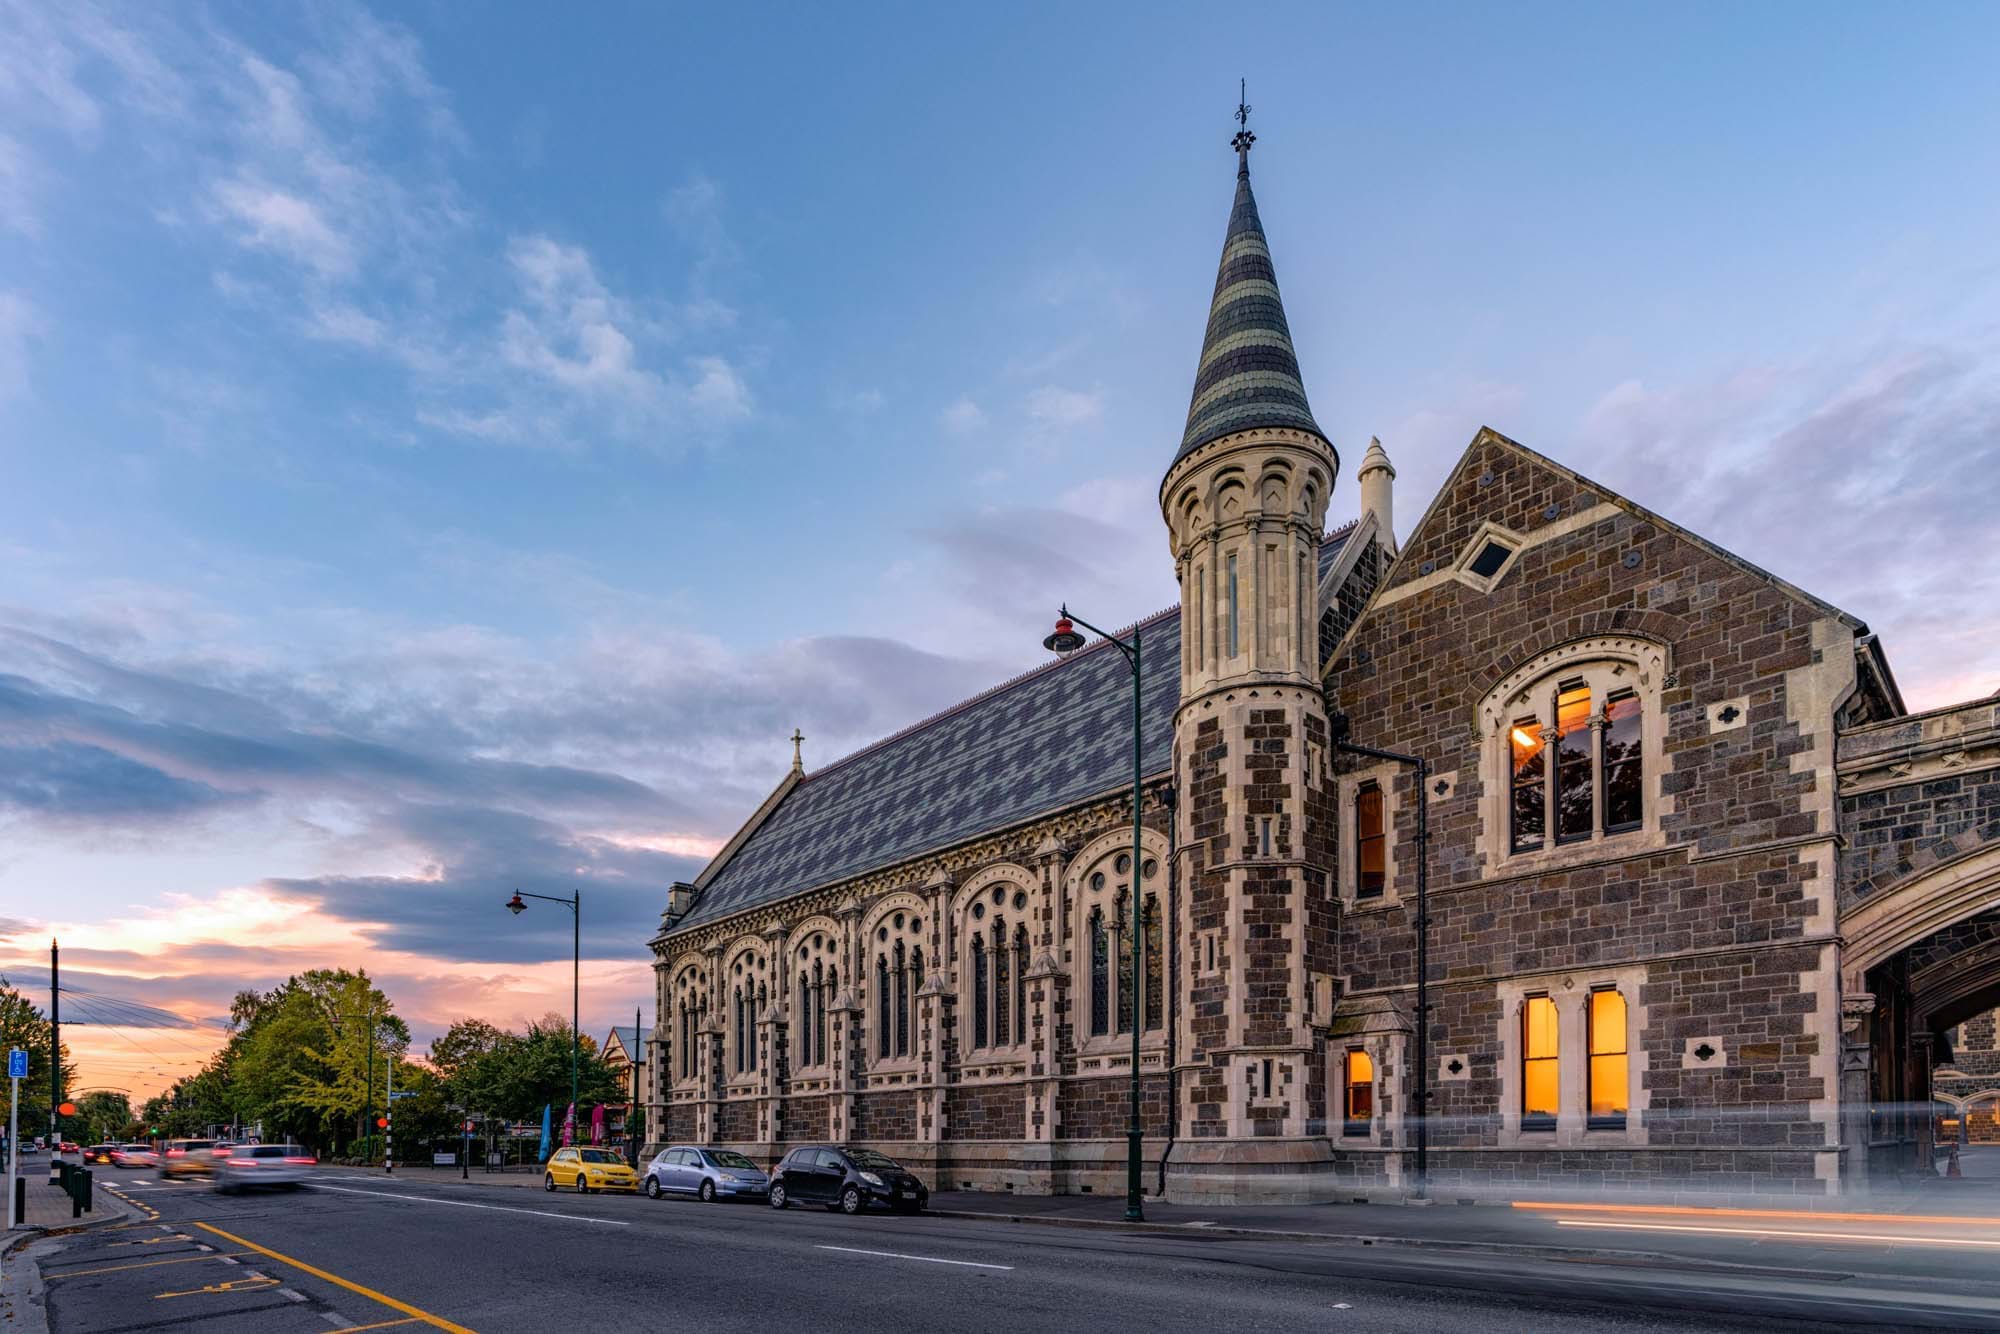 The Christchurch Arts Centre at dusk